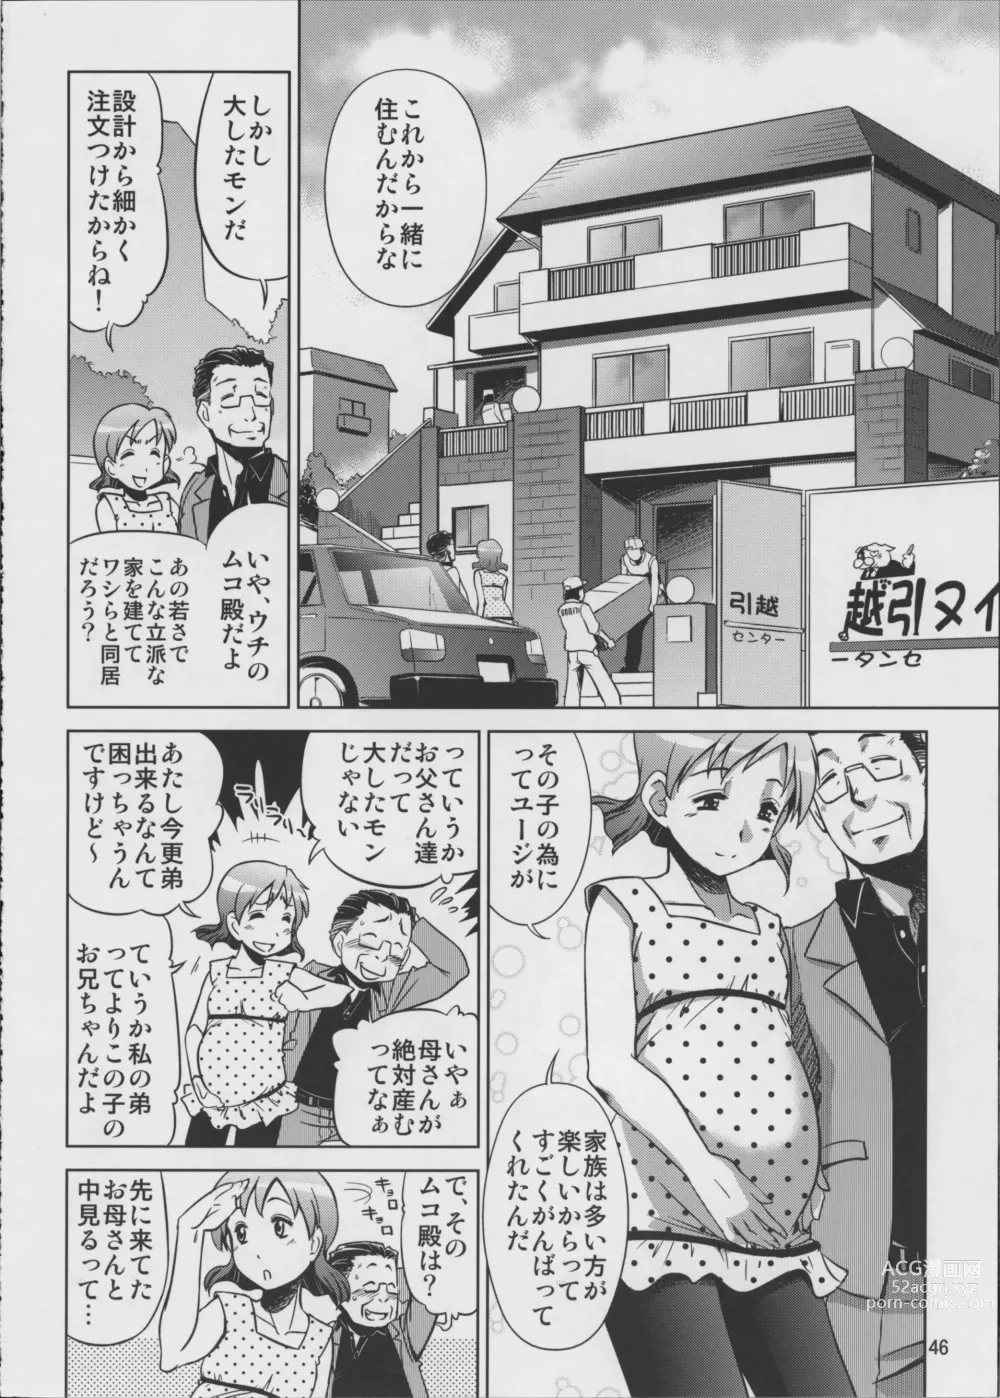 Page 46 of doujinshi Koufuku na Kazoku